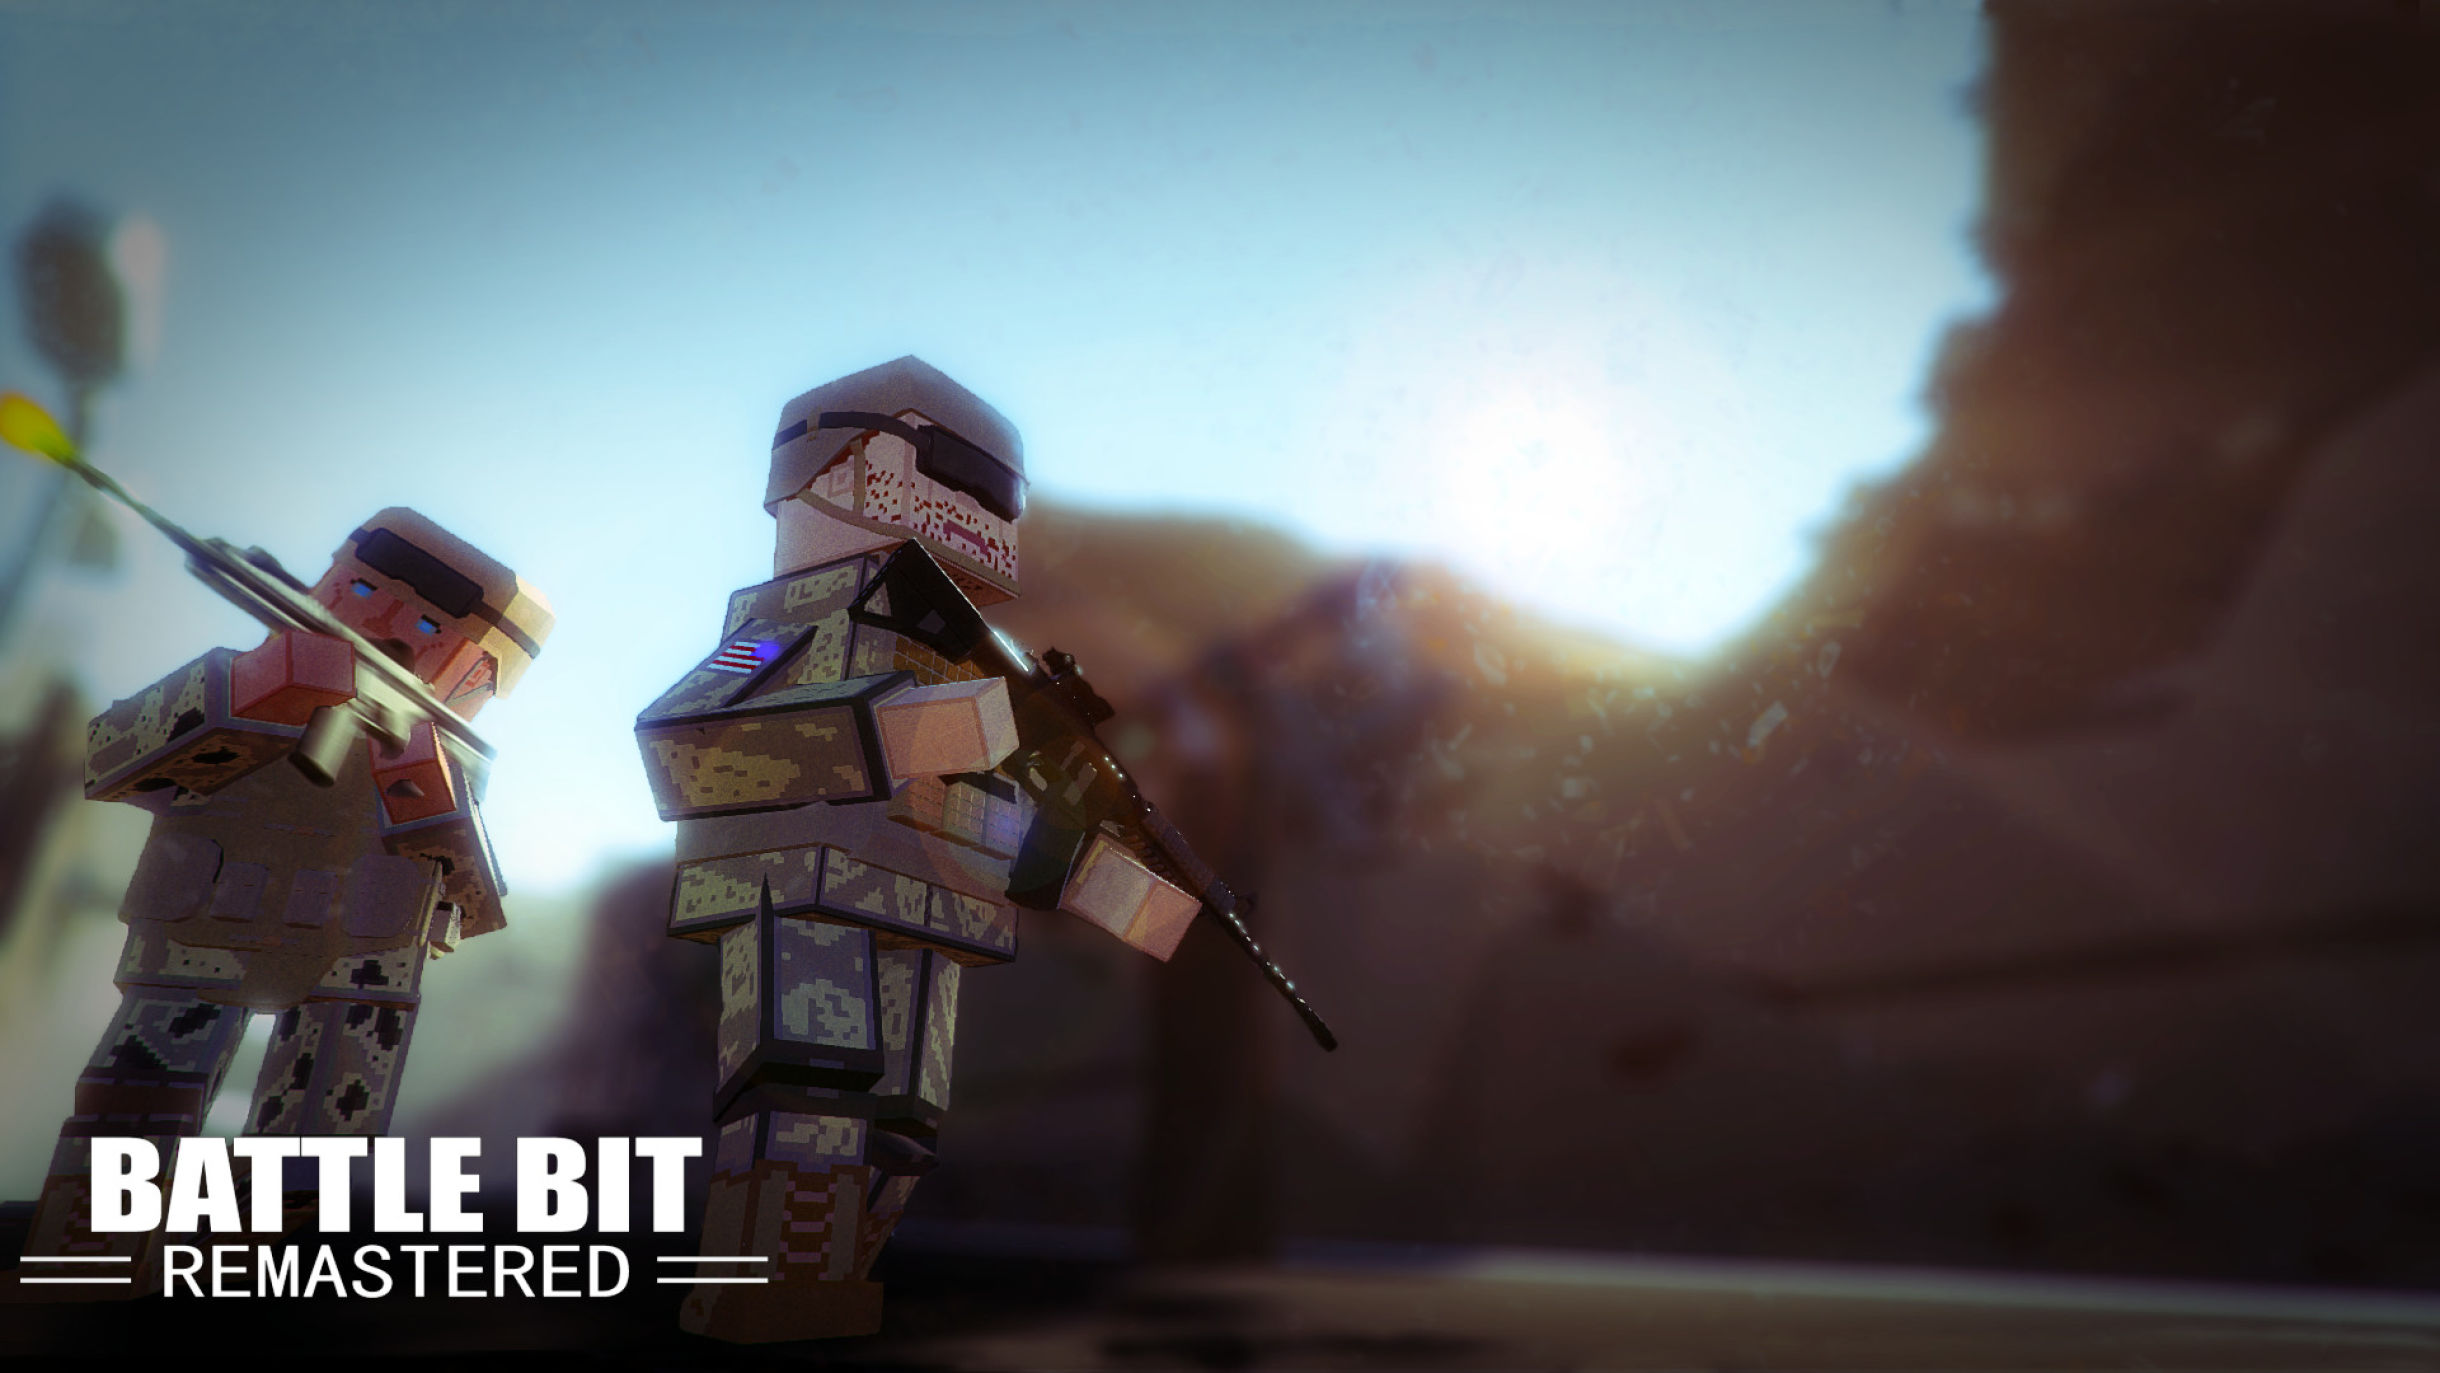 BattleBit Remastered Early Access Begins in June 2023